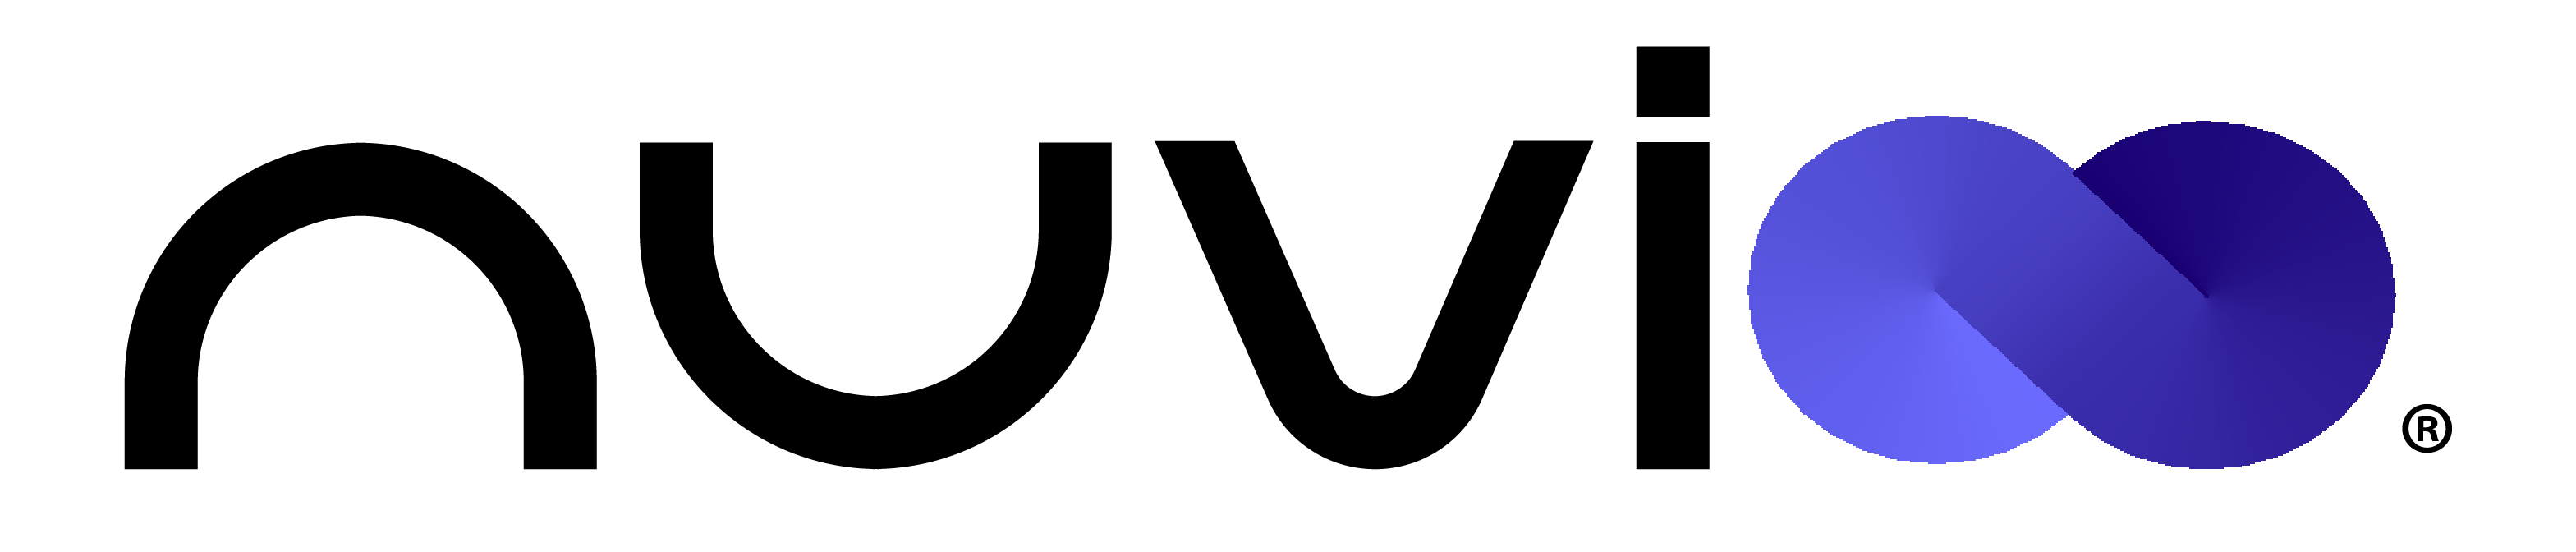 nuvioo logo registered